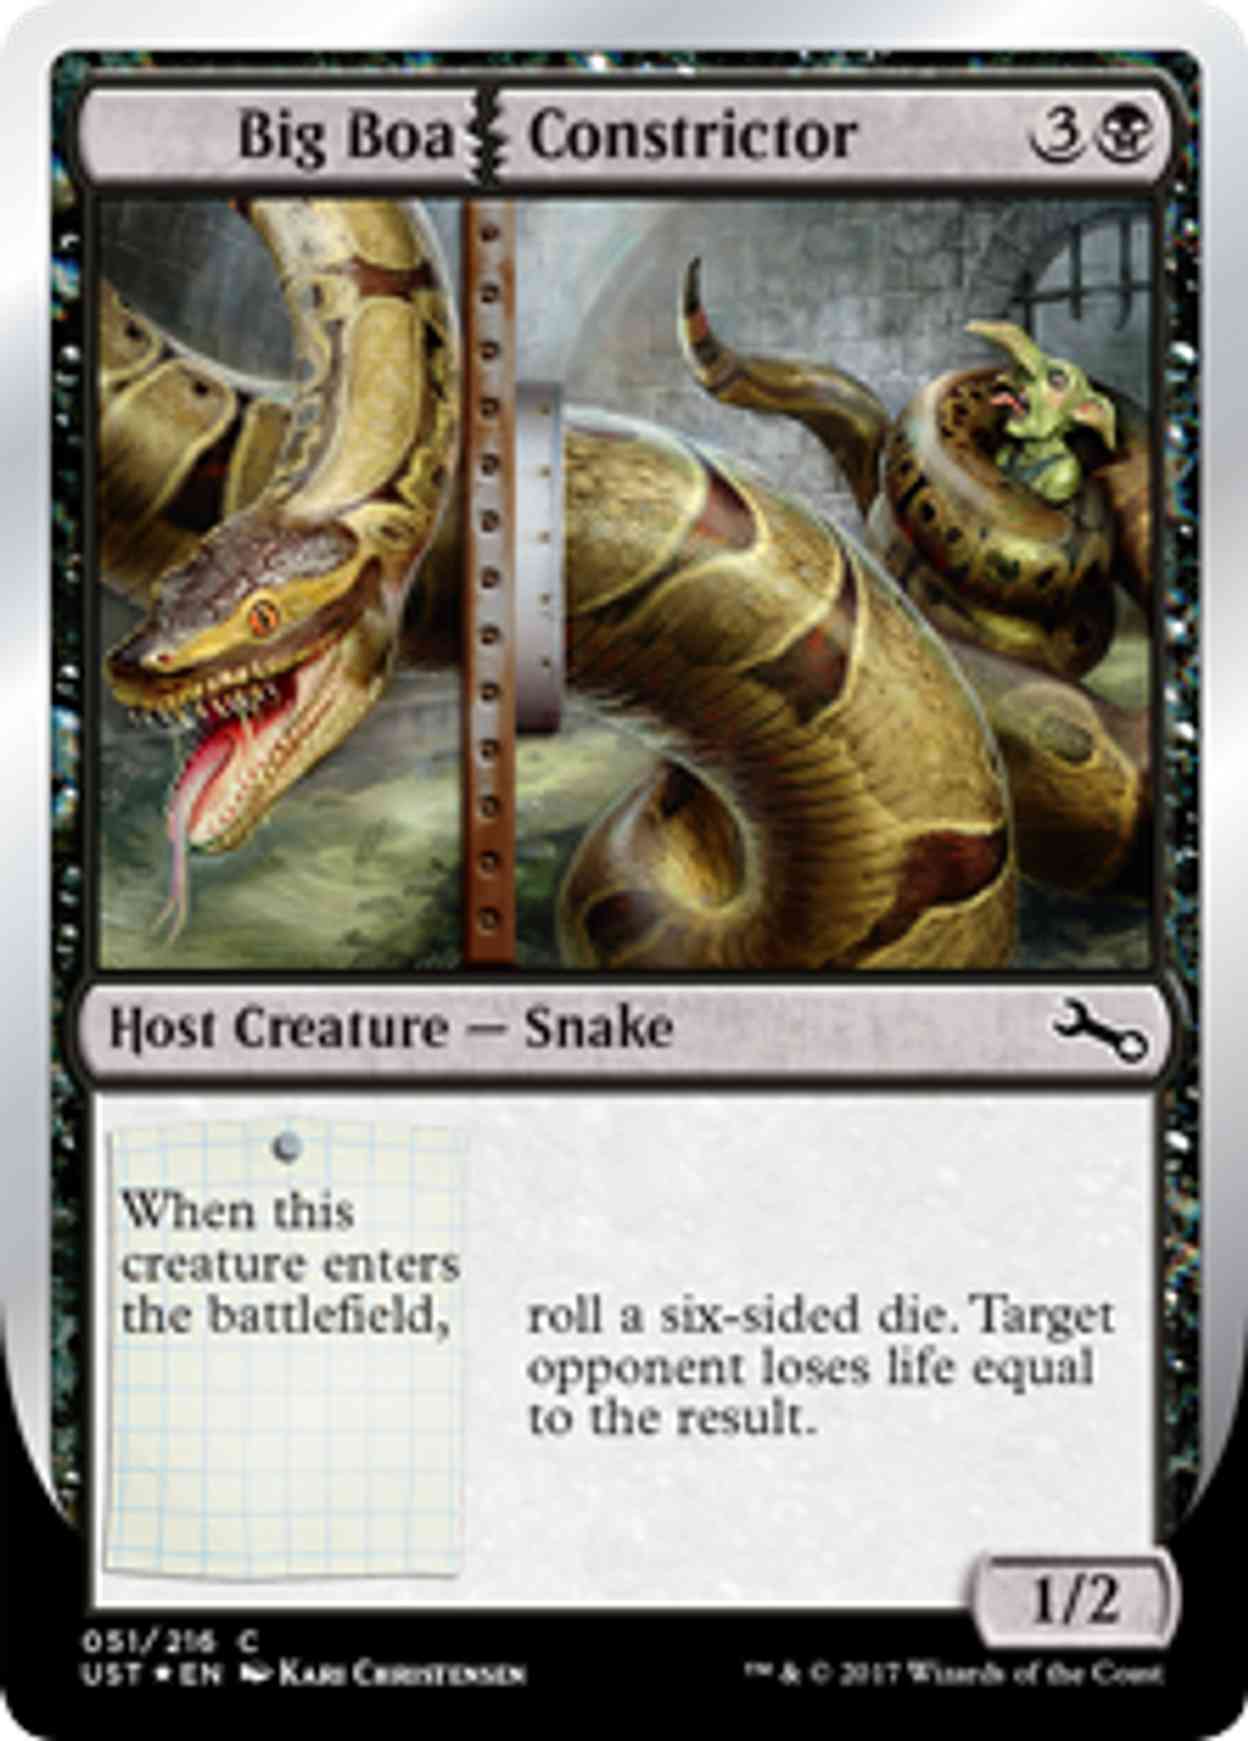 Big Boa Constrictor magic card front